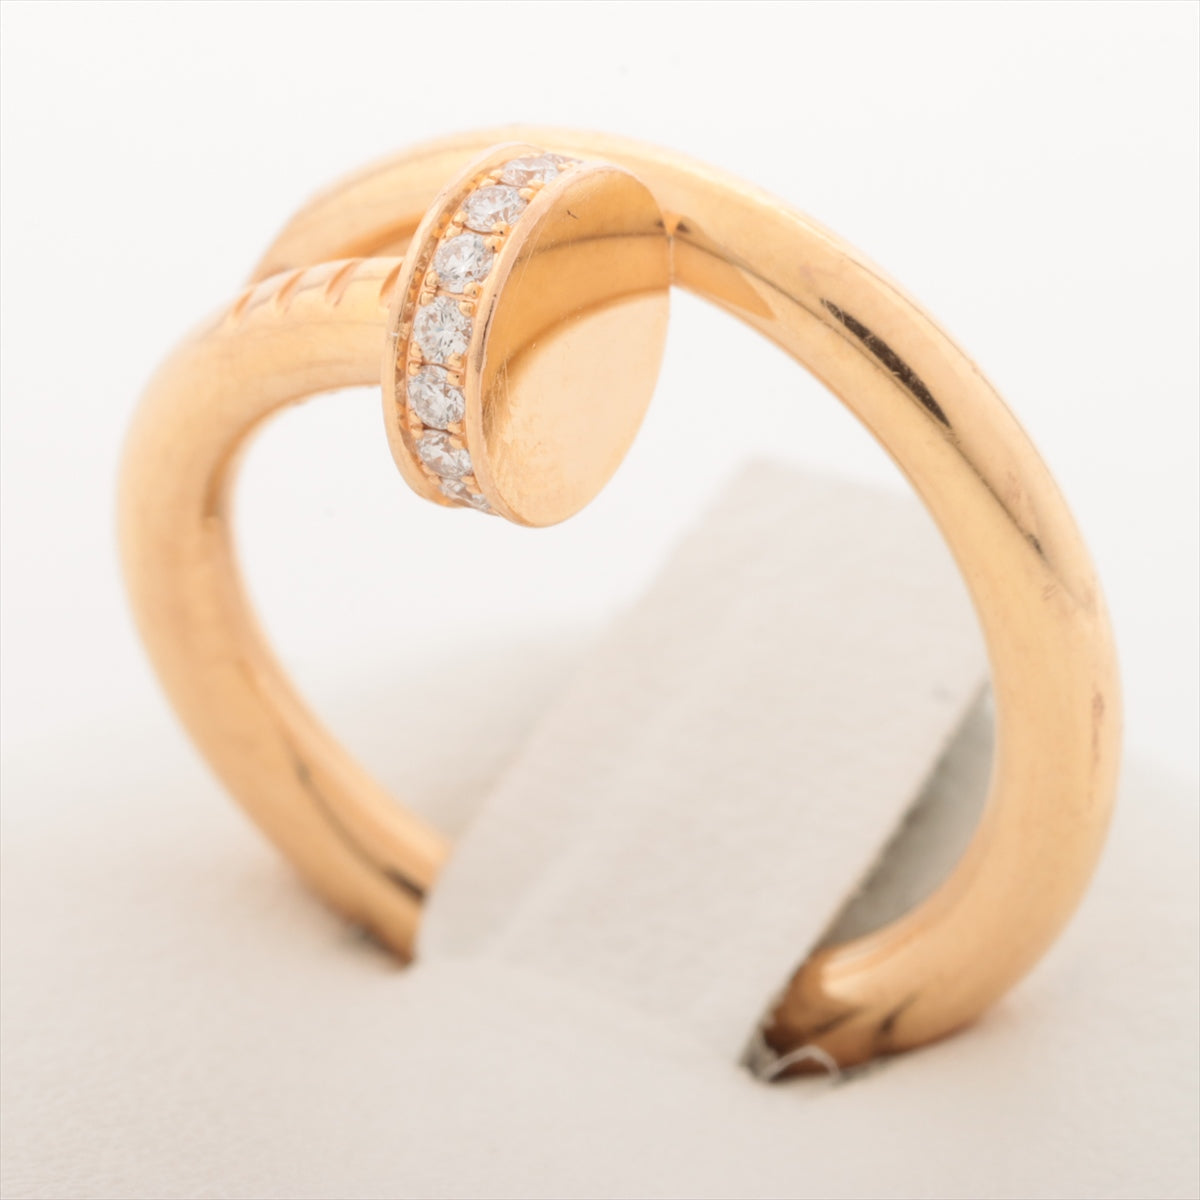 Cartier Juste un Clou Diamond Ring - YZ060183 - 750(YG) 7.1g - Size 51 - Full Set